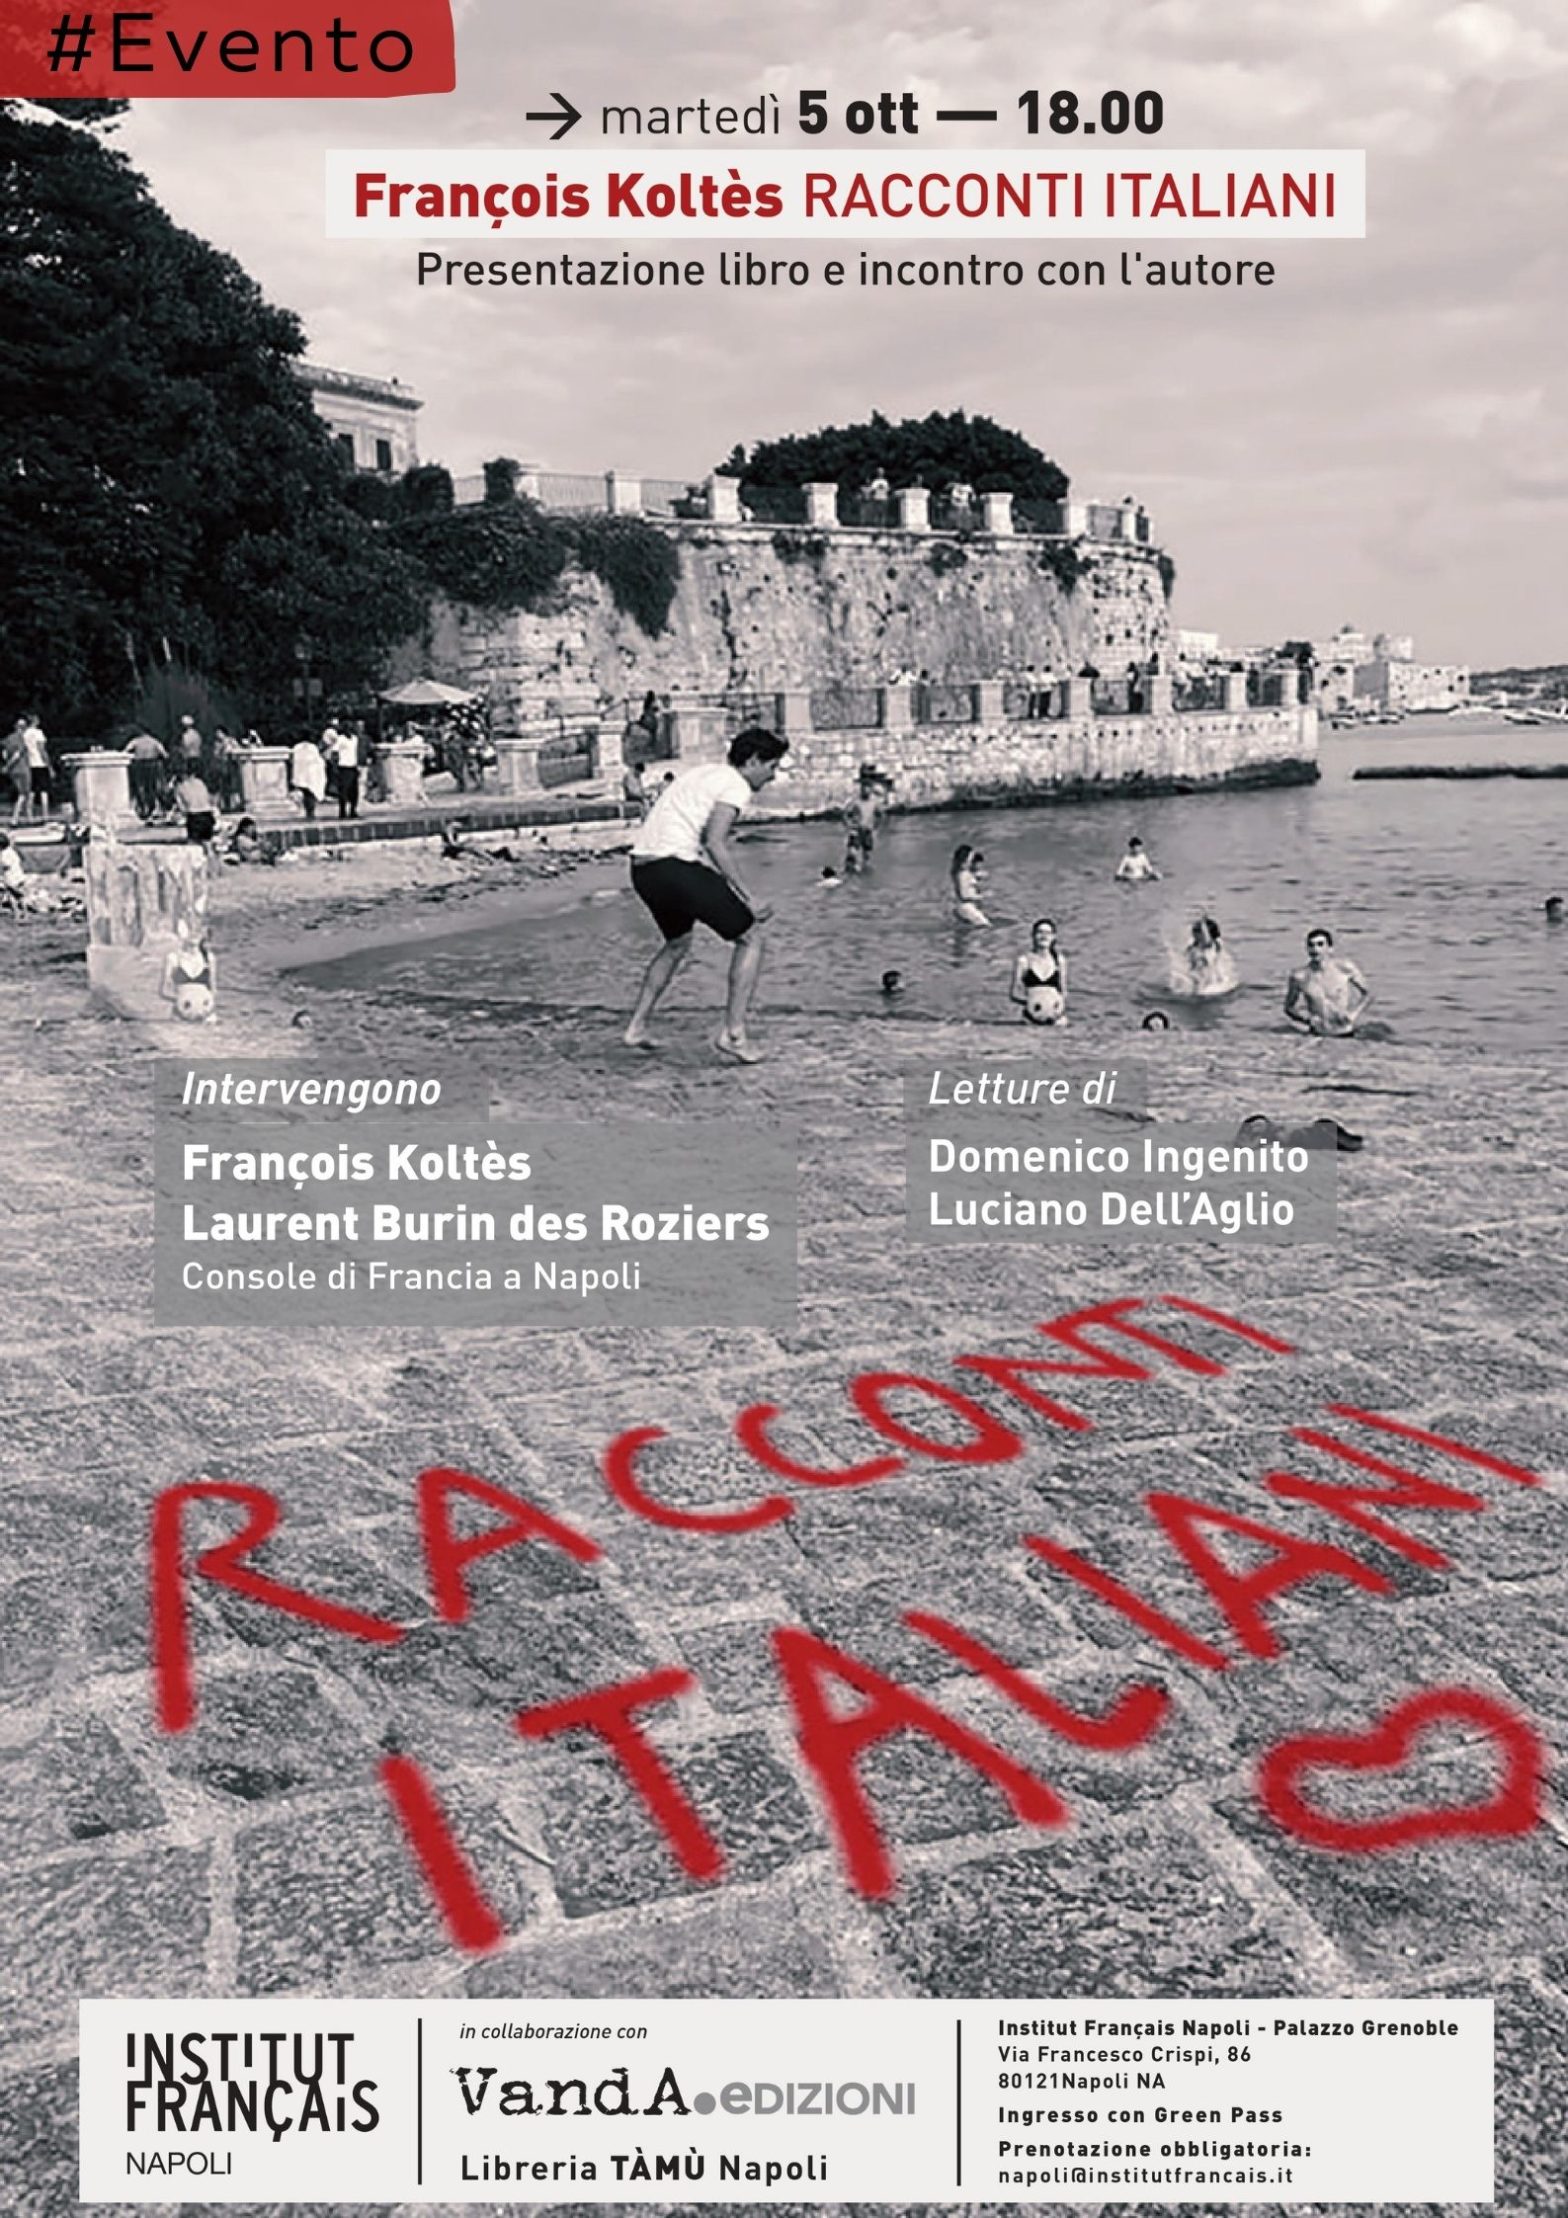 Presentazione “Racconti Italiani” di François Koltès all’Institut Français, Napoli